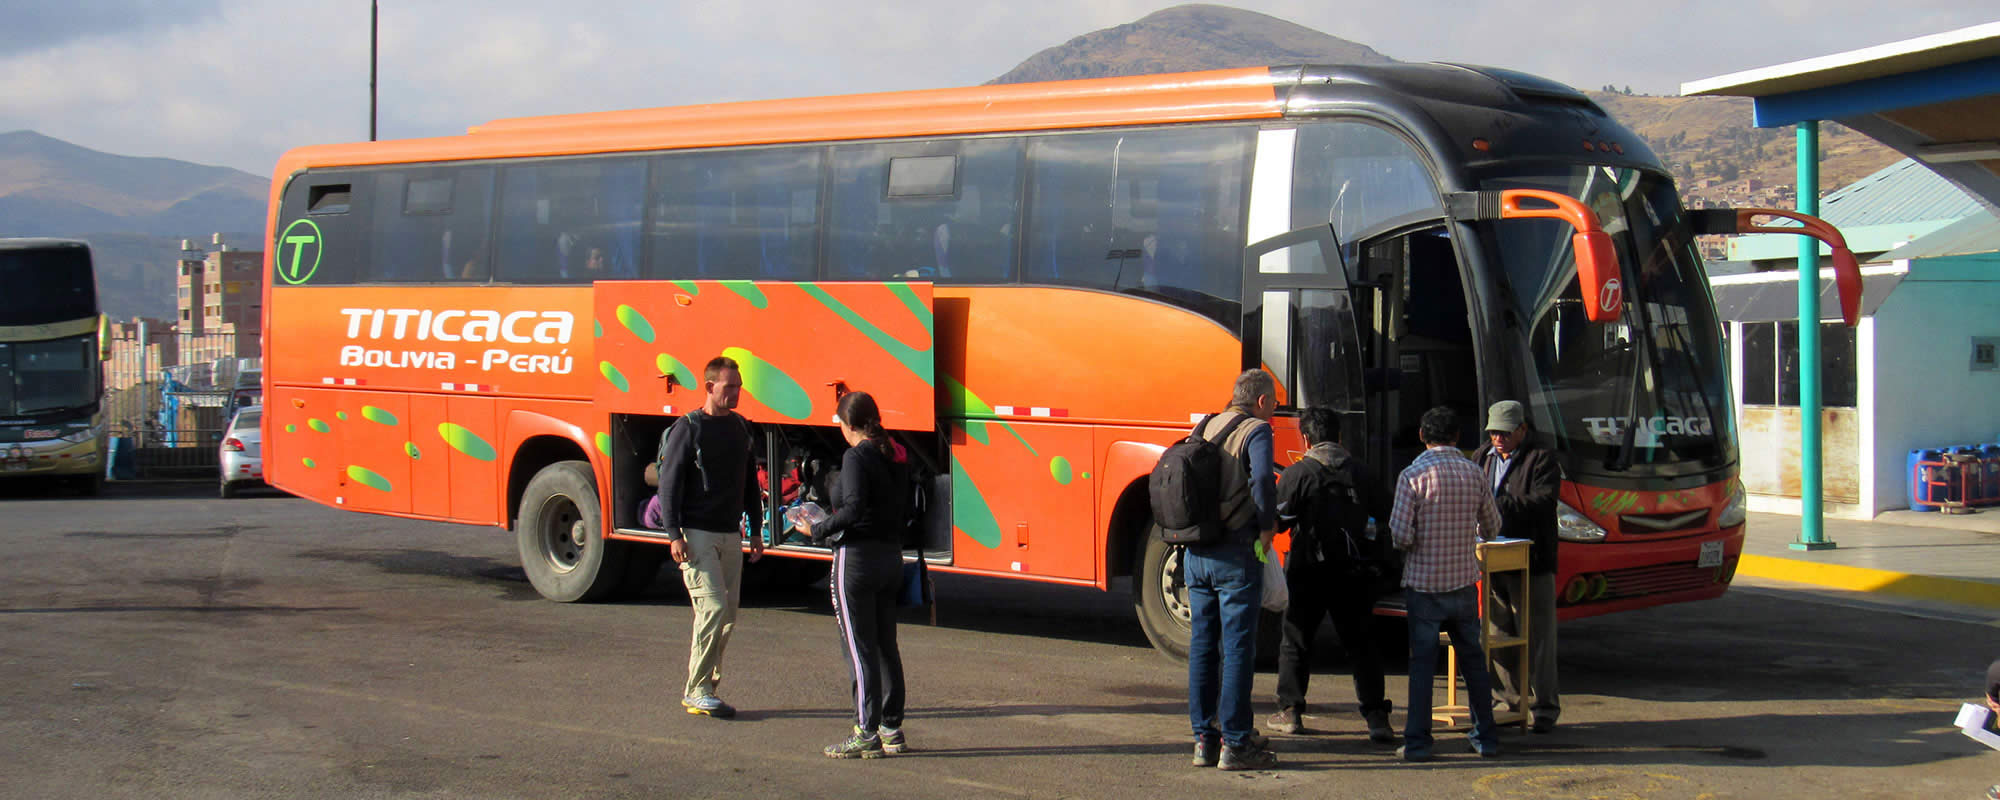 Titicaca Bus